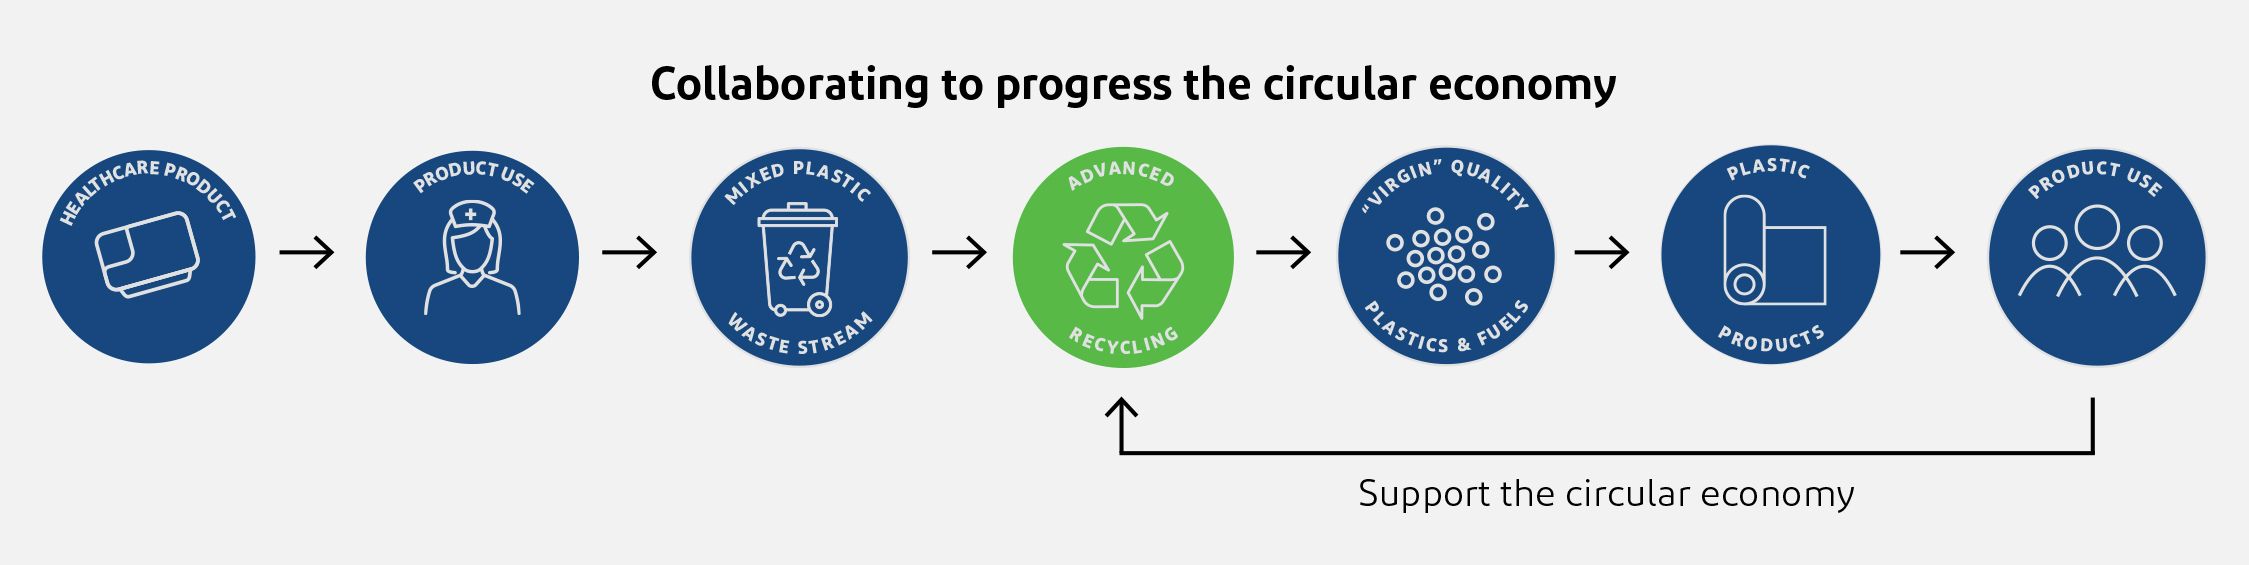 Tyvek® Recycling Program